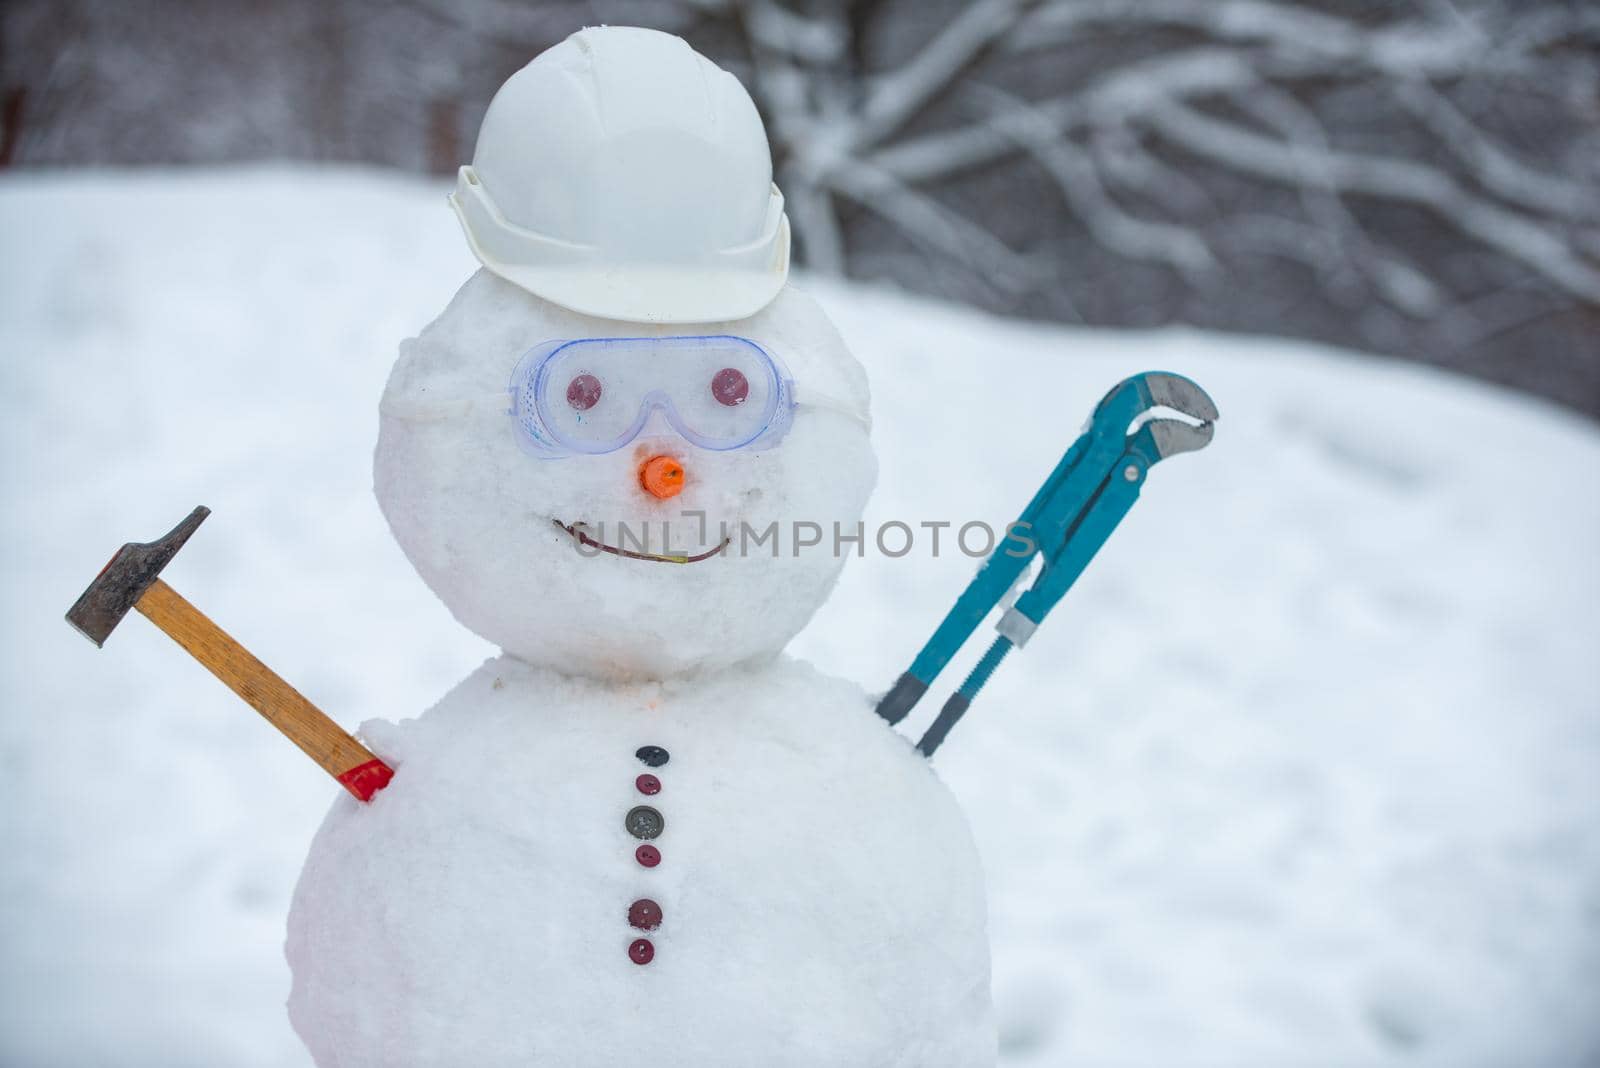 Snowman worker on snow background. Funny snowman in work helmet on snowy field. Handmade snowman in the snow outdoor